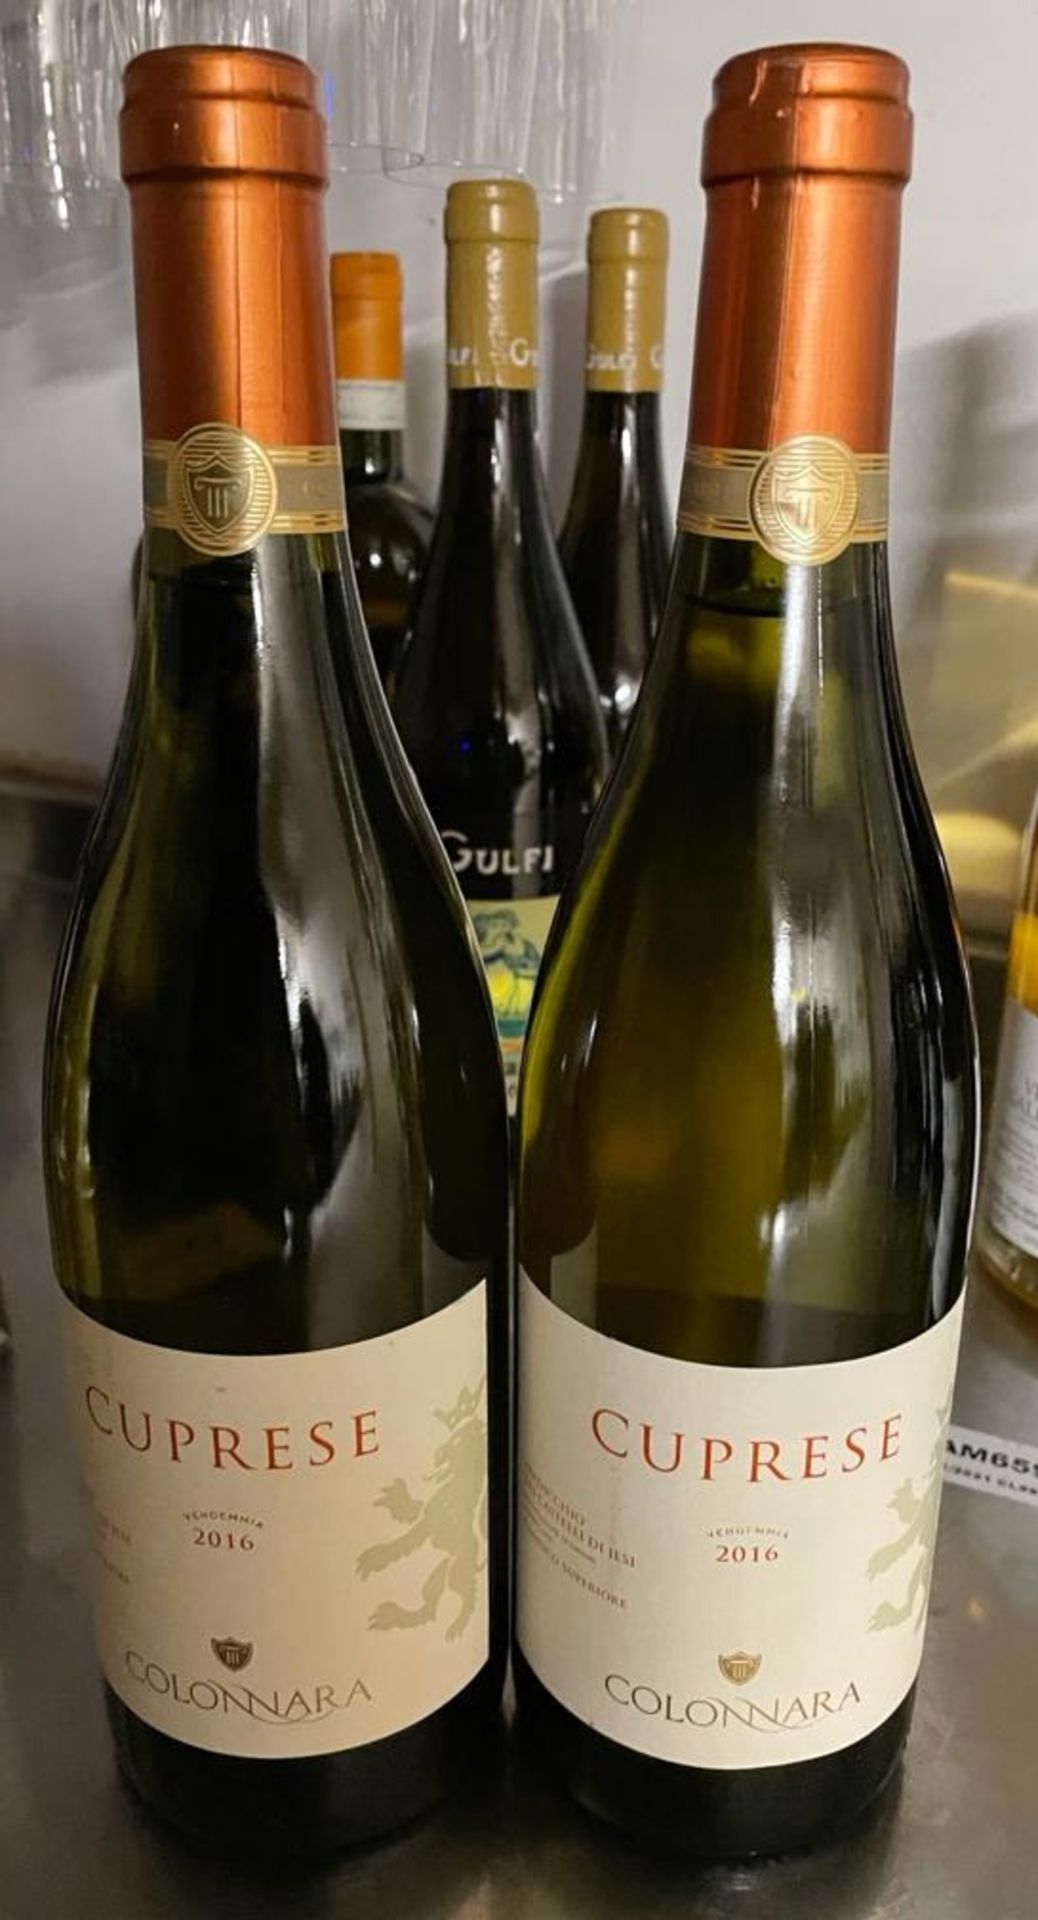 2 x Bottles Of CUPRESE COLONNARA - 2016 - 75cl - New/Unopened Restaurant Stock - Ref: CAM660